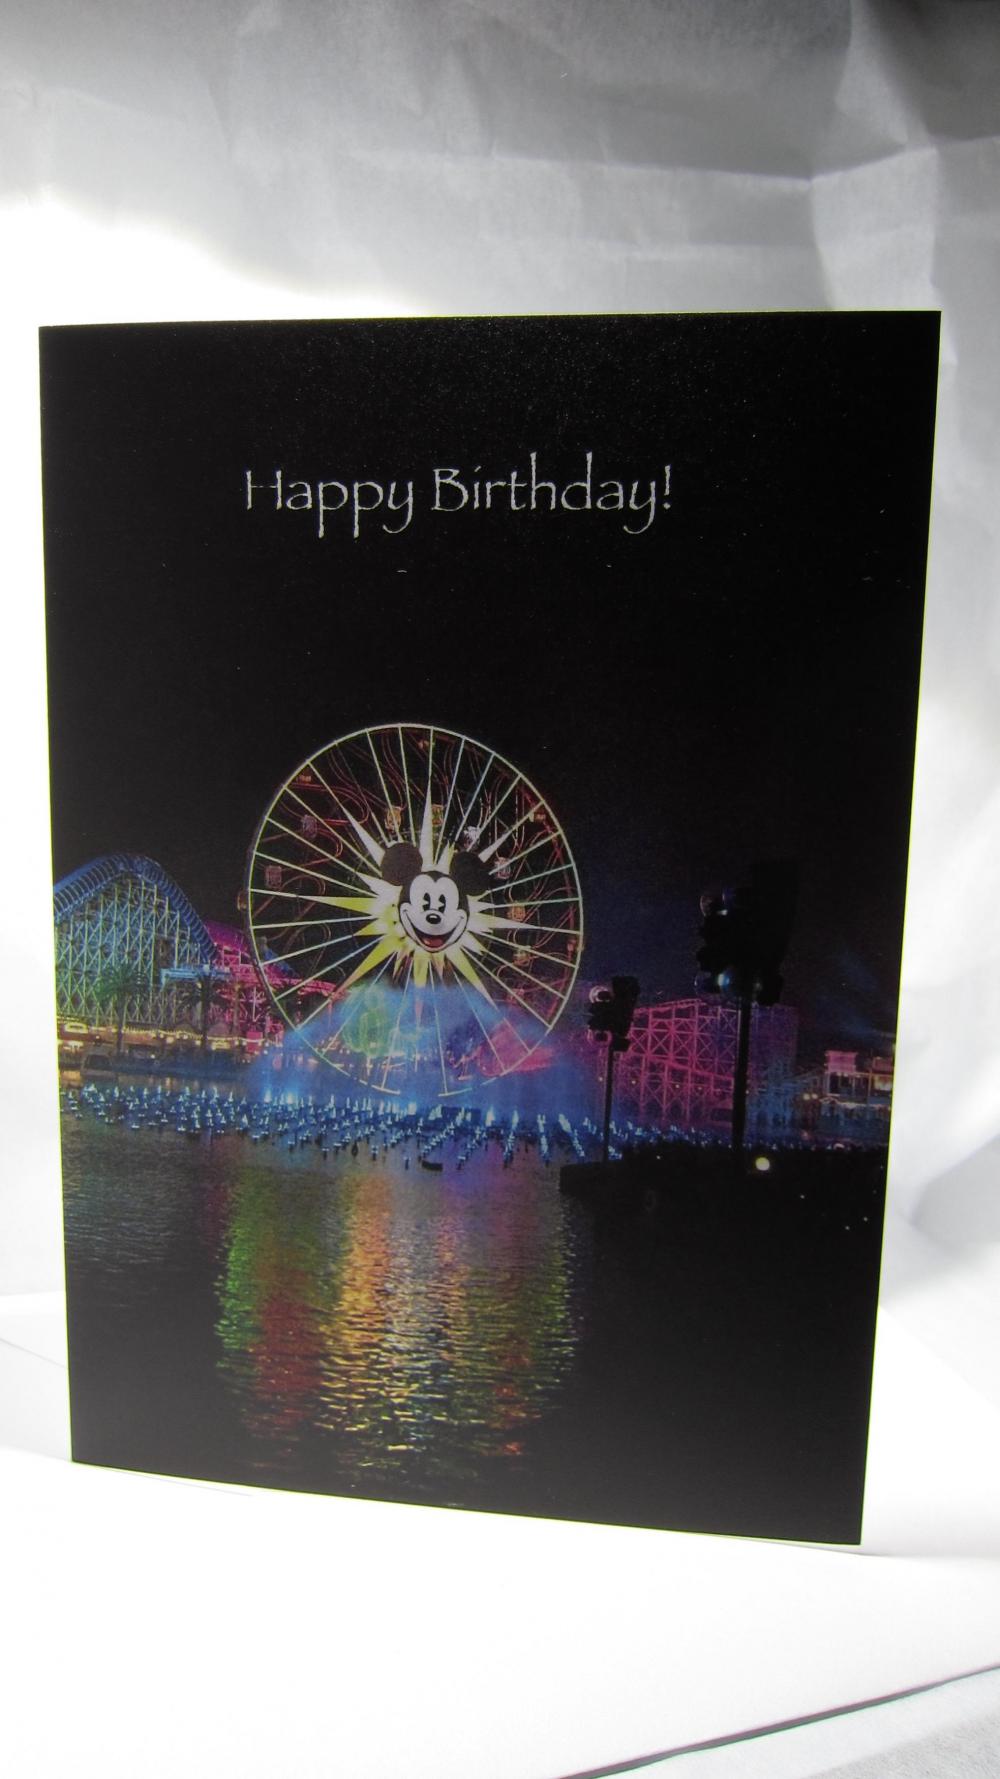 Mickey Fun Wheel Birthday Card - California Adventure Park's World Of Color Show